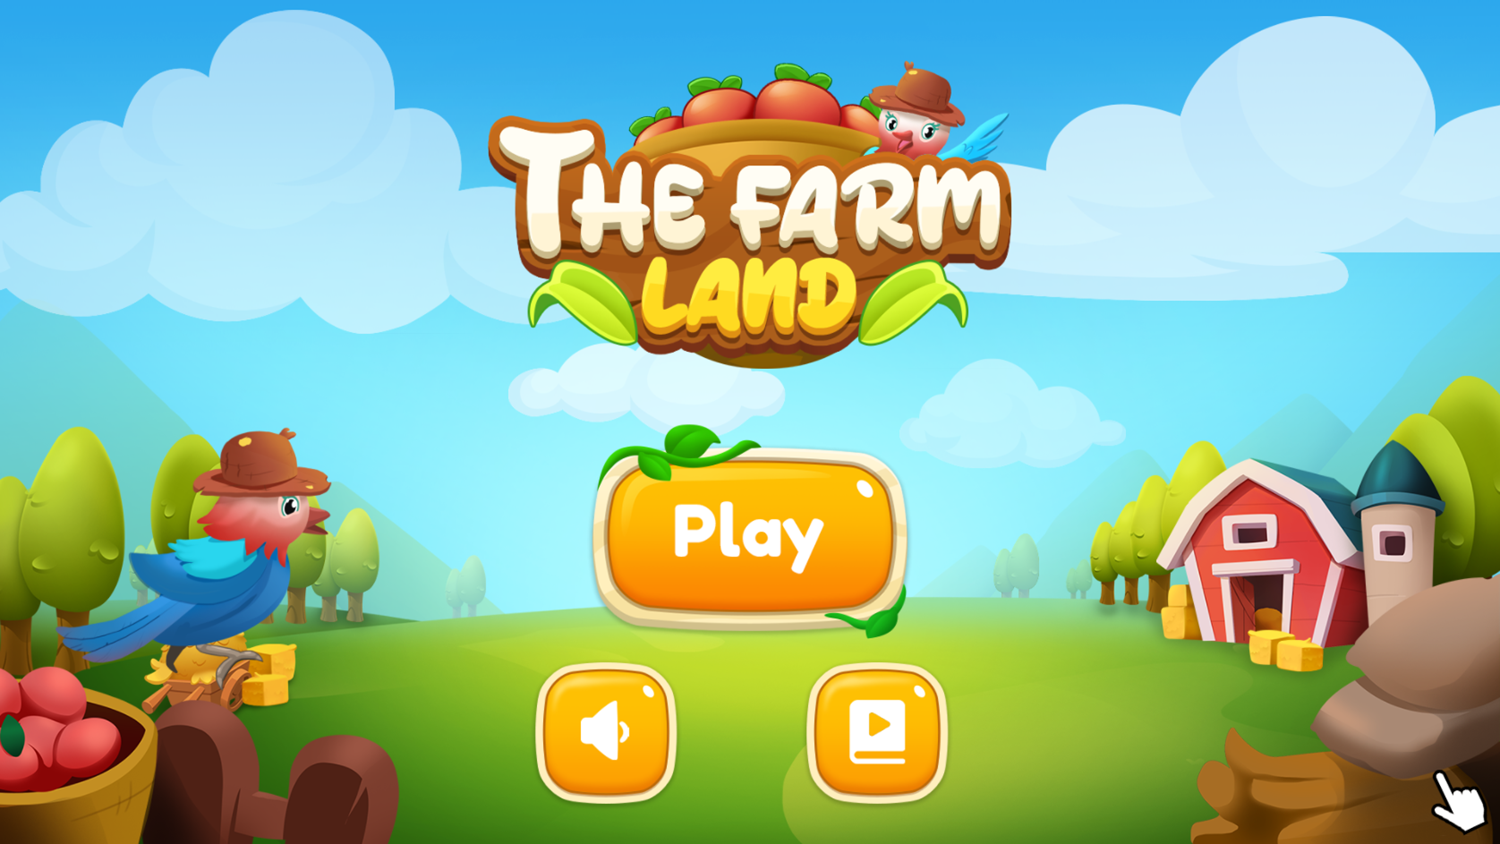 The Farm Land Game Welcome Screen Screenshot.